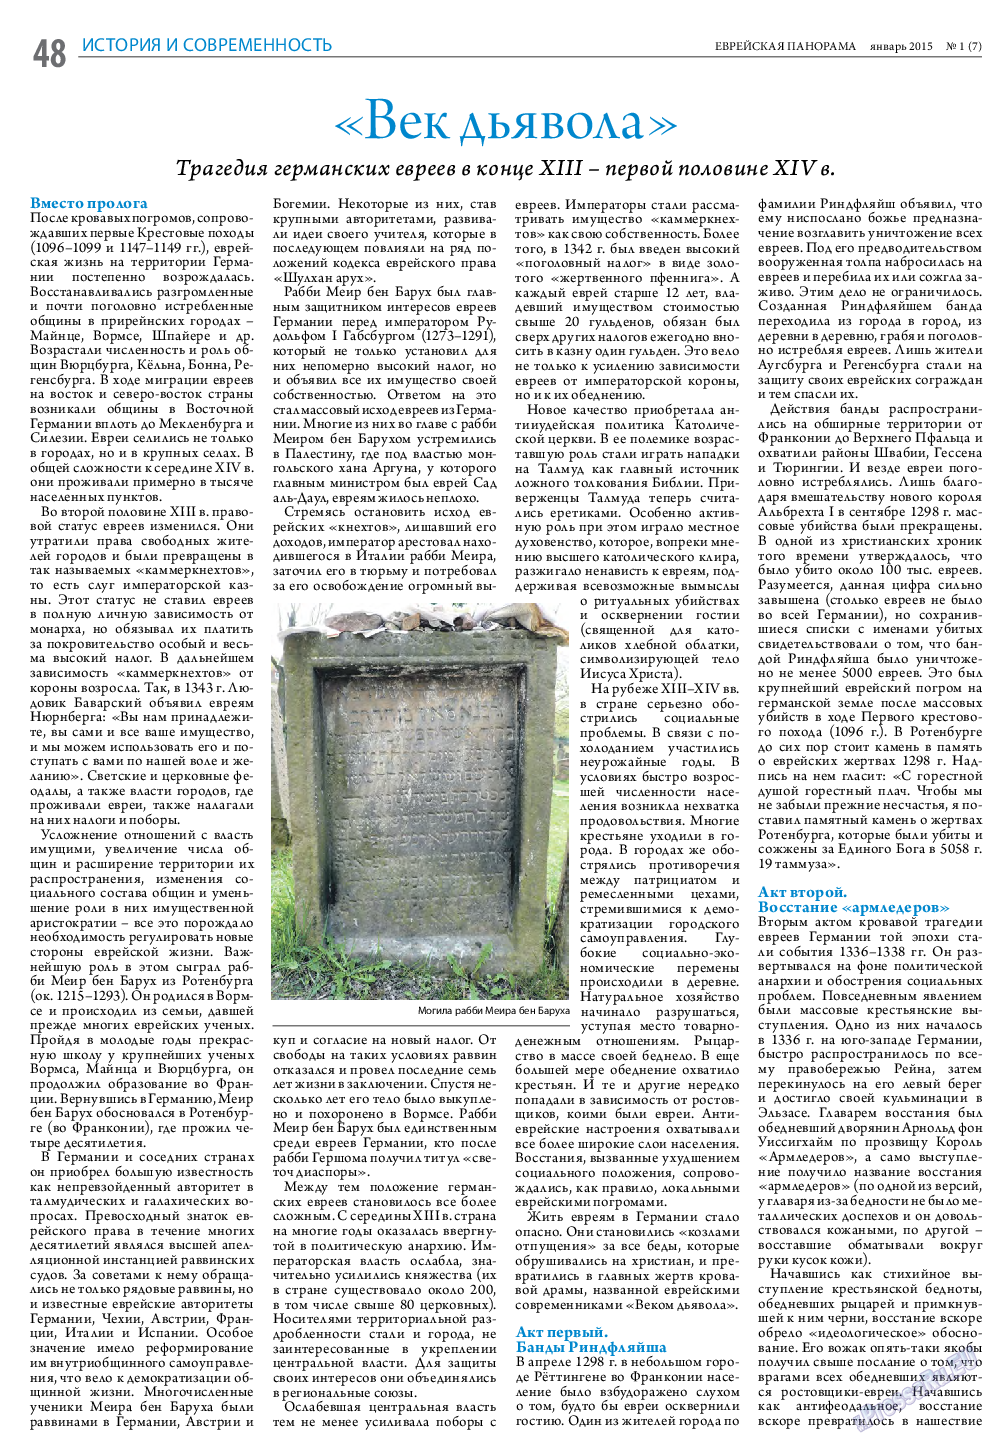 Еврейская панорама, газета. 2015 №1 стр.48